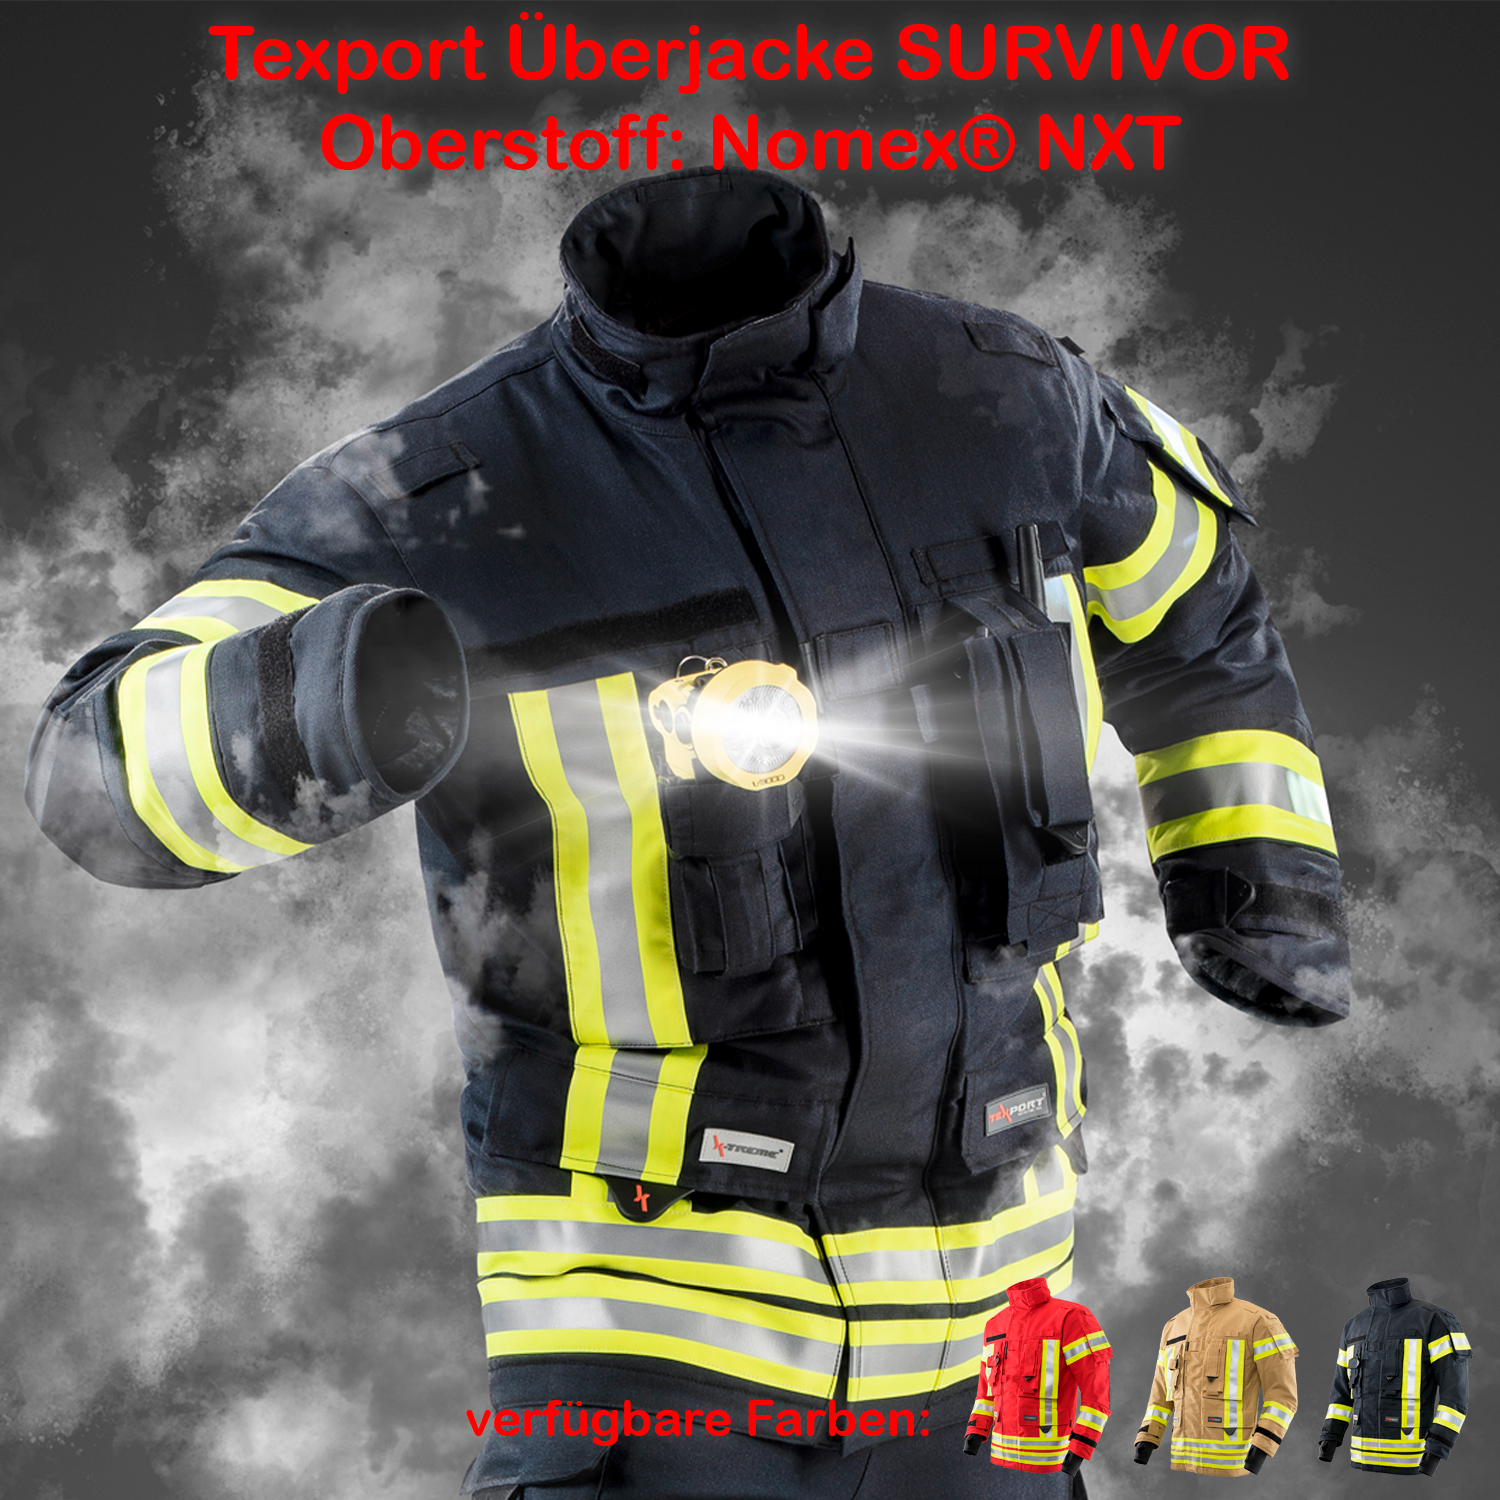 TEXPORT Fire Survivor Jacke - gold - Nomex® NXT - X-Treme® light - Funktion: Loop - Größe: XS-5